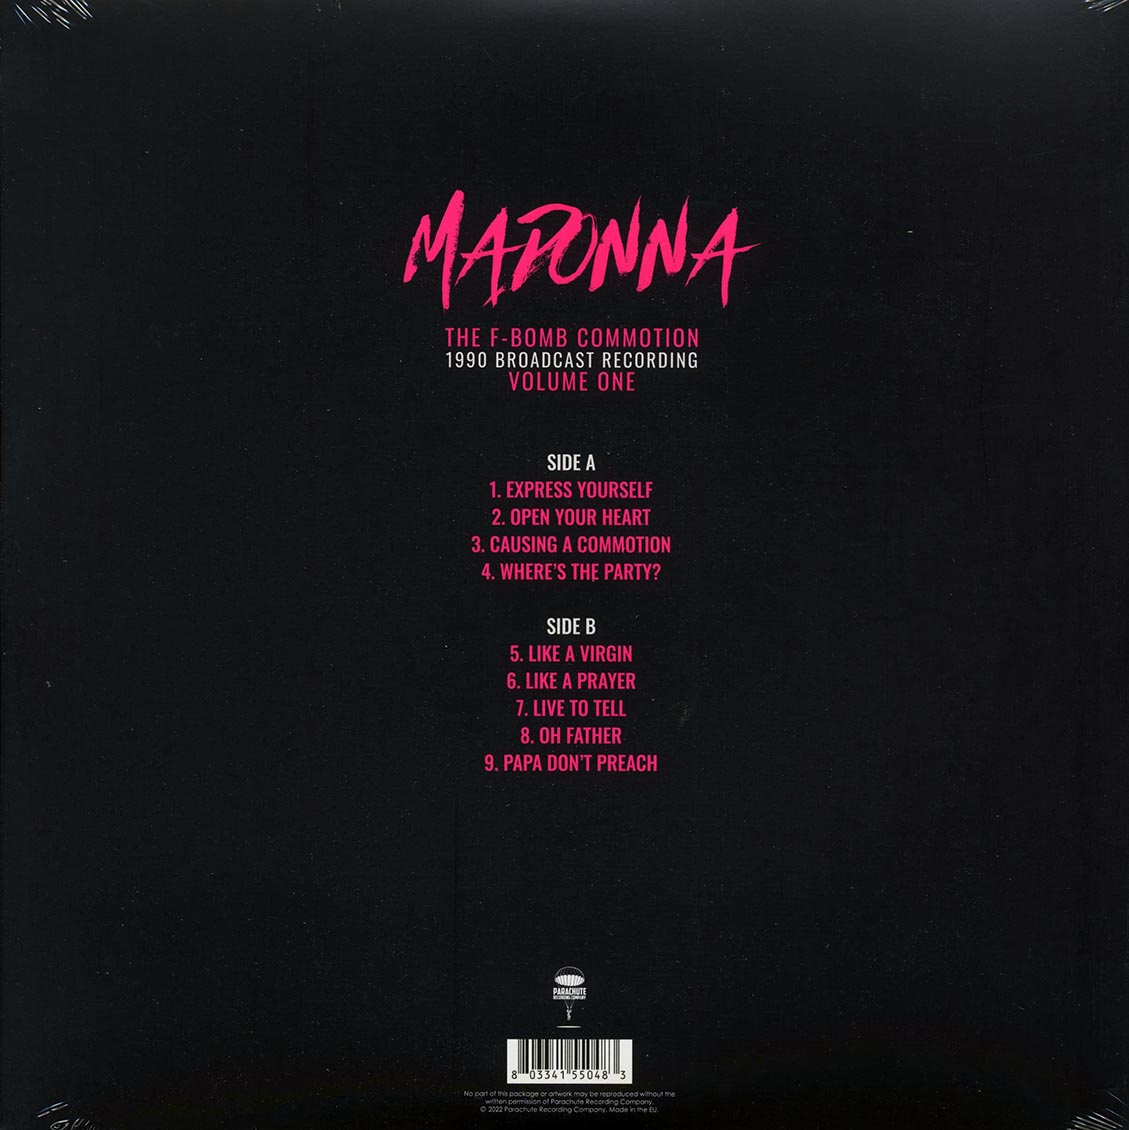 Madonna - The F-bomb Commotion Volume 1: 1990 Broadcast Recording - Vinyl LP, LP